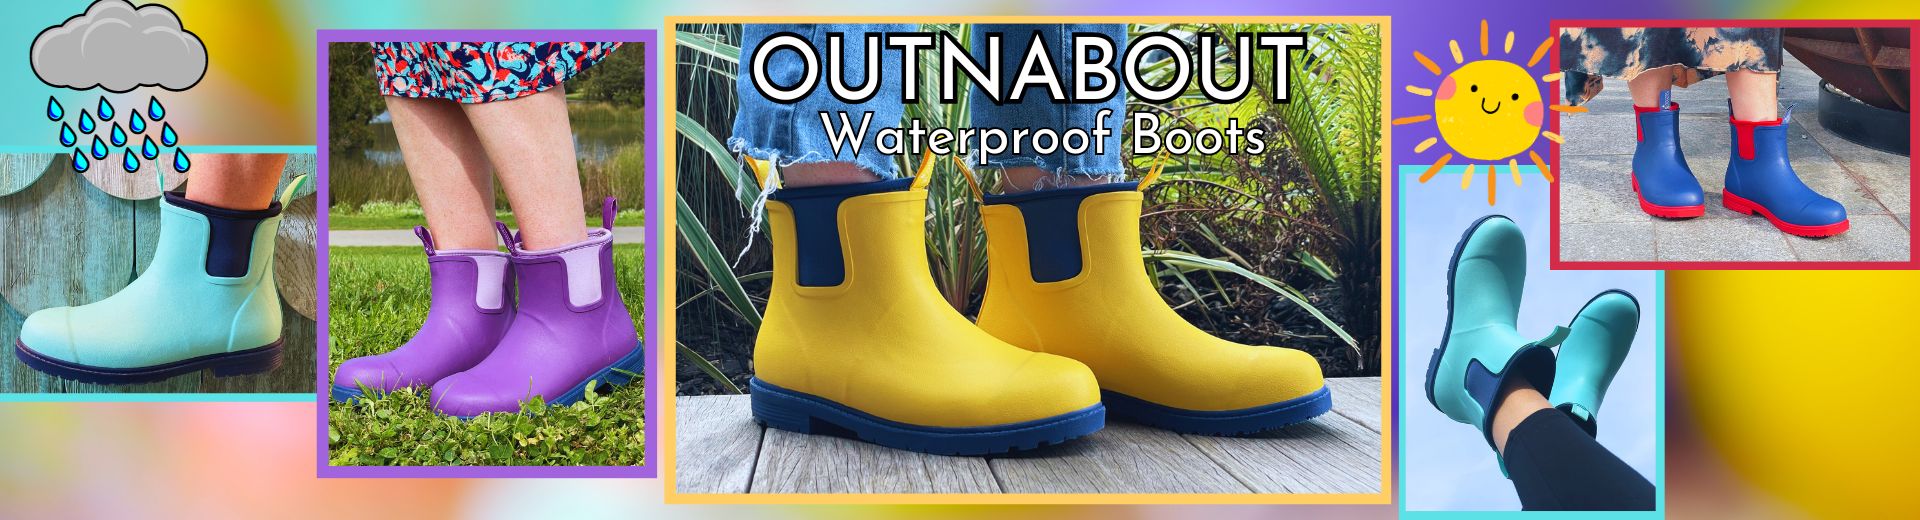 Outnabout waterproof Women's boot hero banner